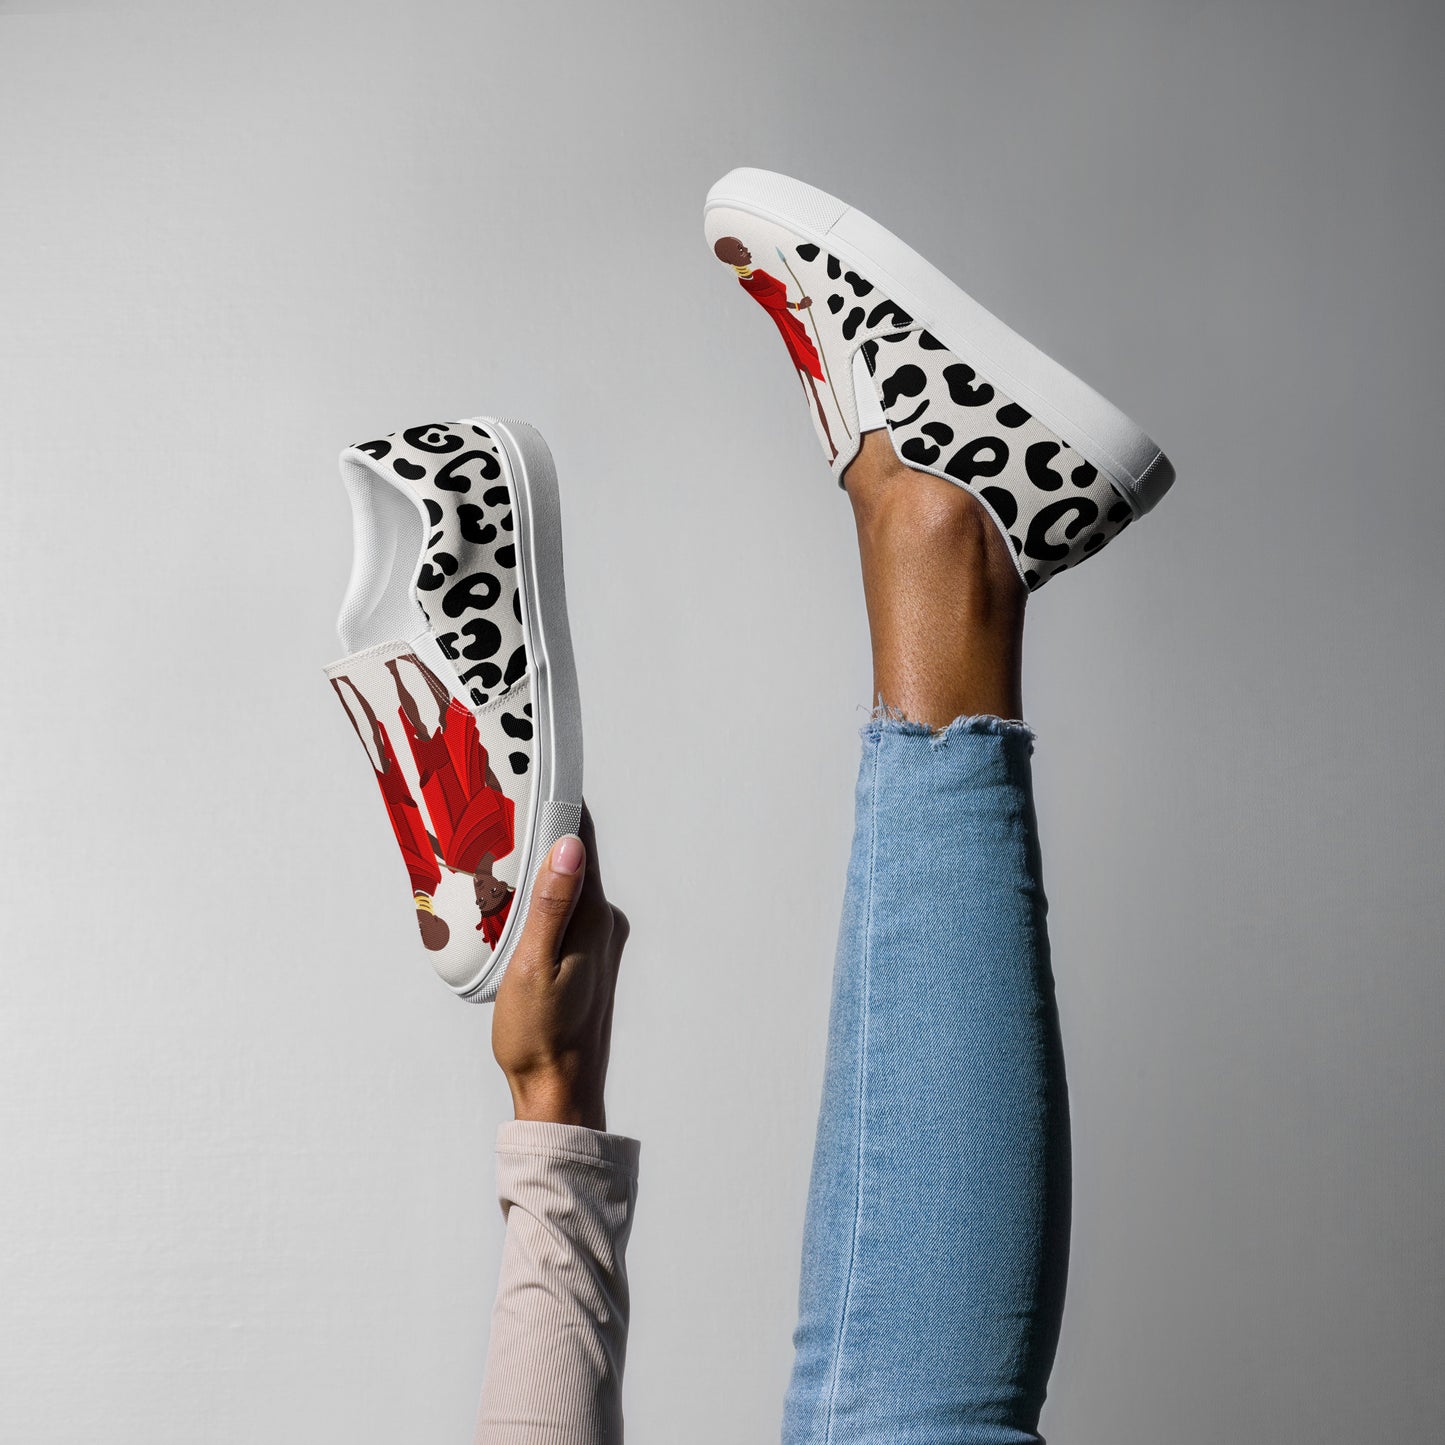 Agojie Animal Print Women’s Slip-on canvas shoes